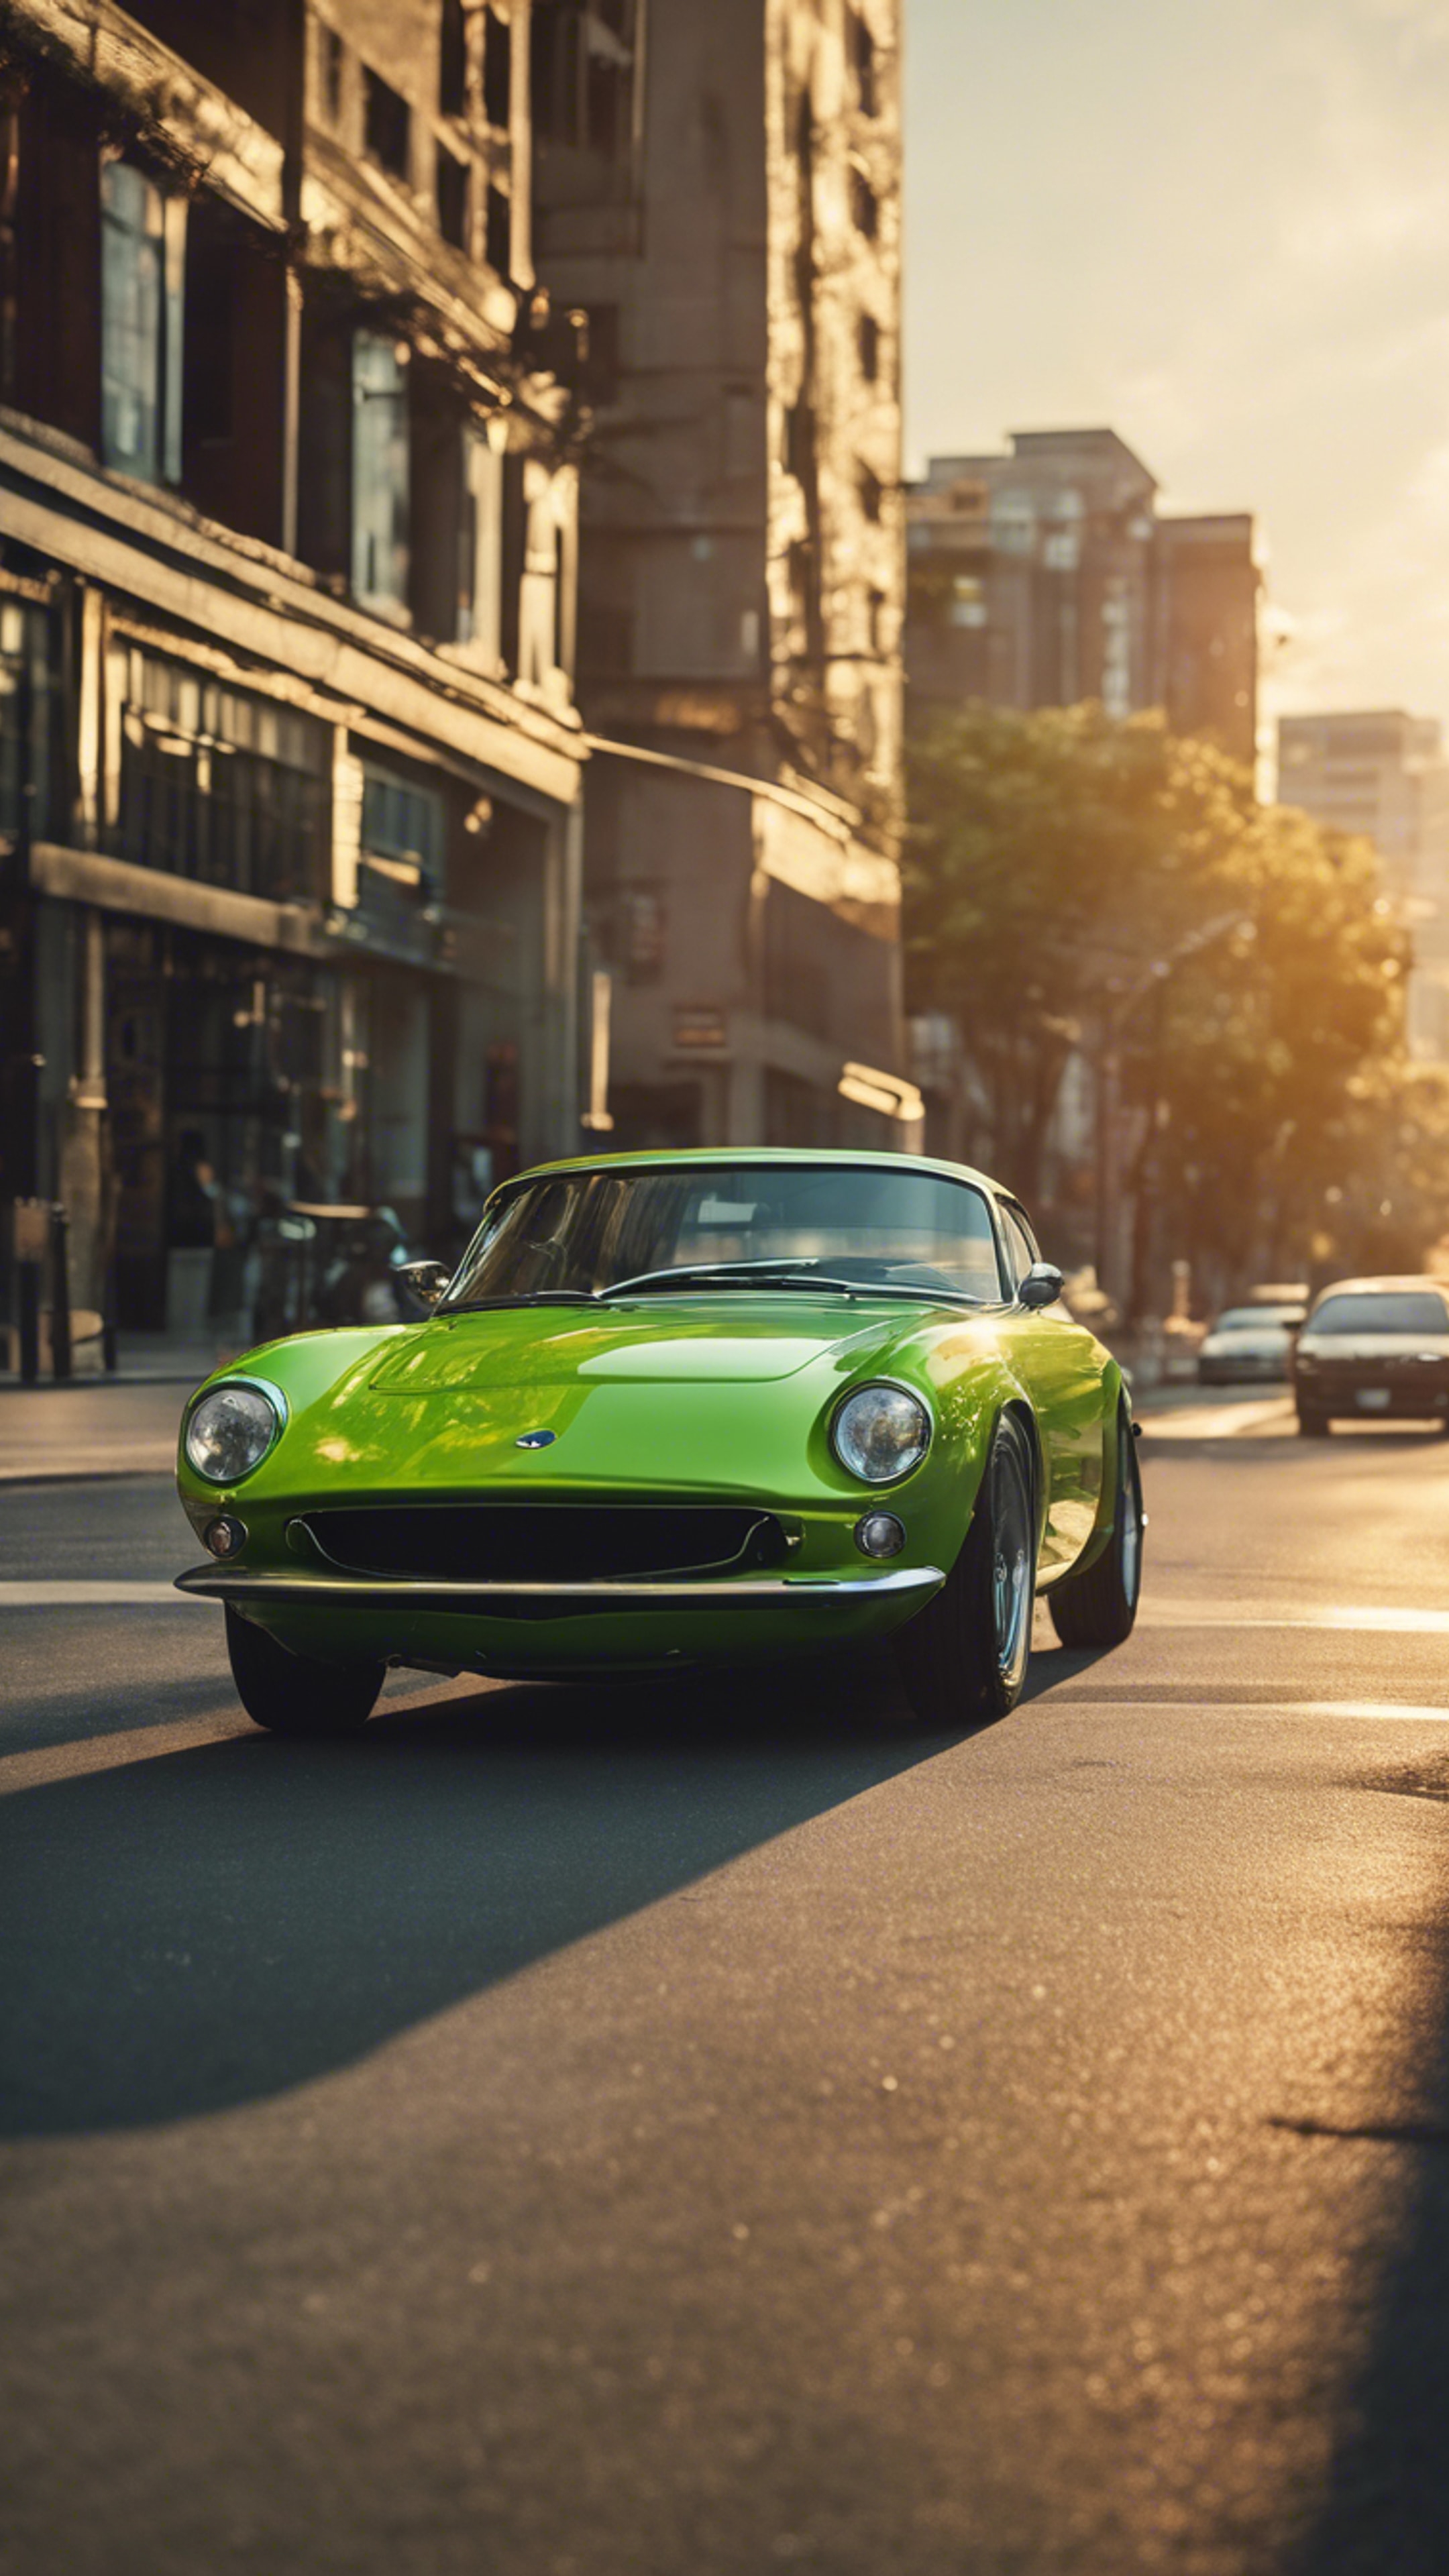 A lime green sports car speeding down a city street at sunset. کاغذ دیواری[650ecab6c10046e0a1d5]